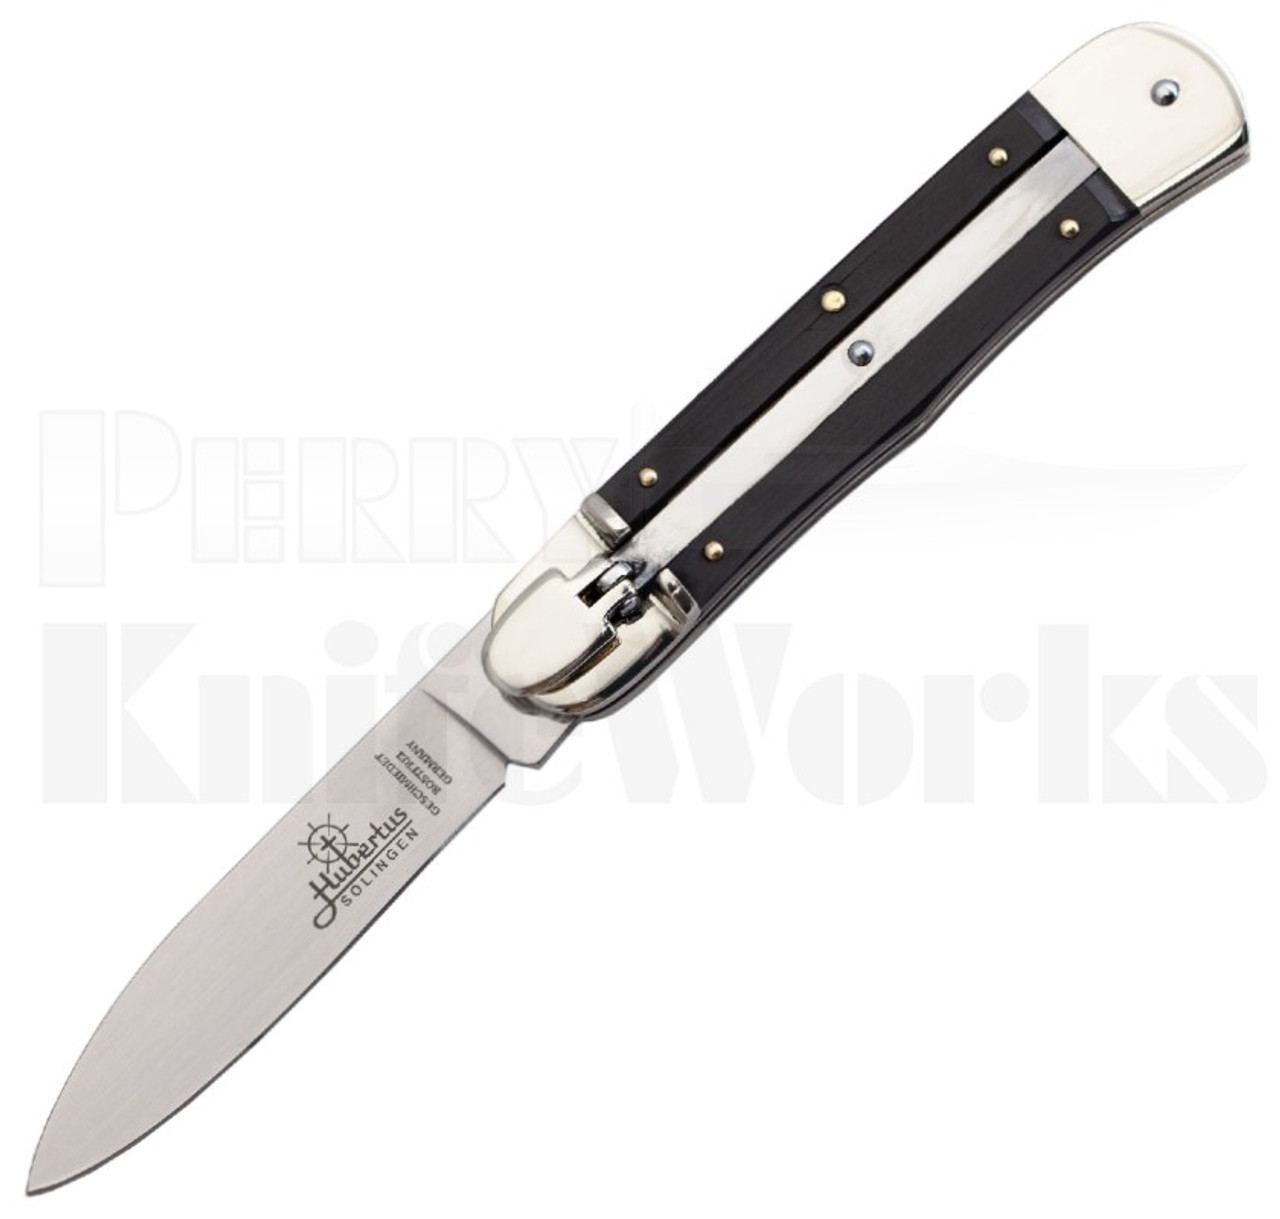 Hubertus Springer 7.75" Automatic Knife Ebony l Drop-Point l For Sale